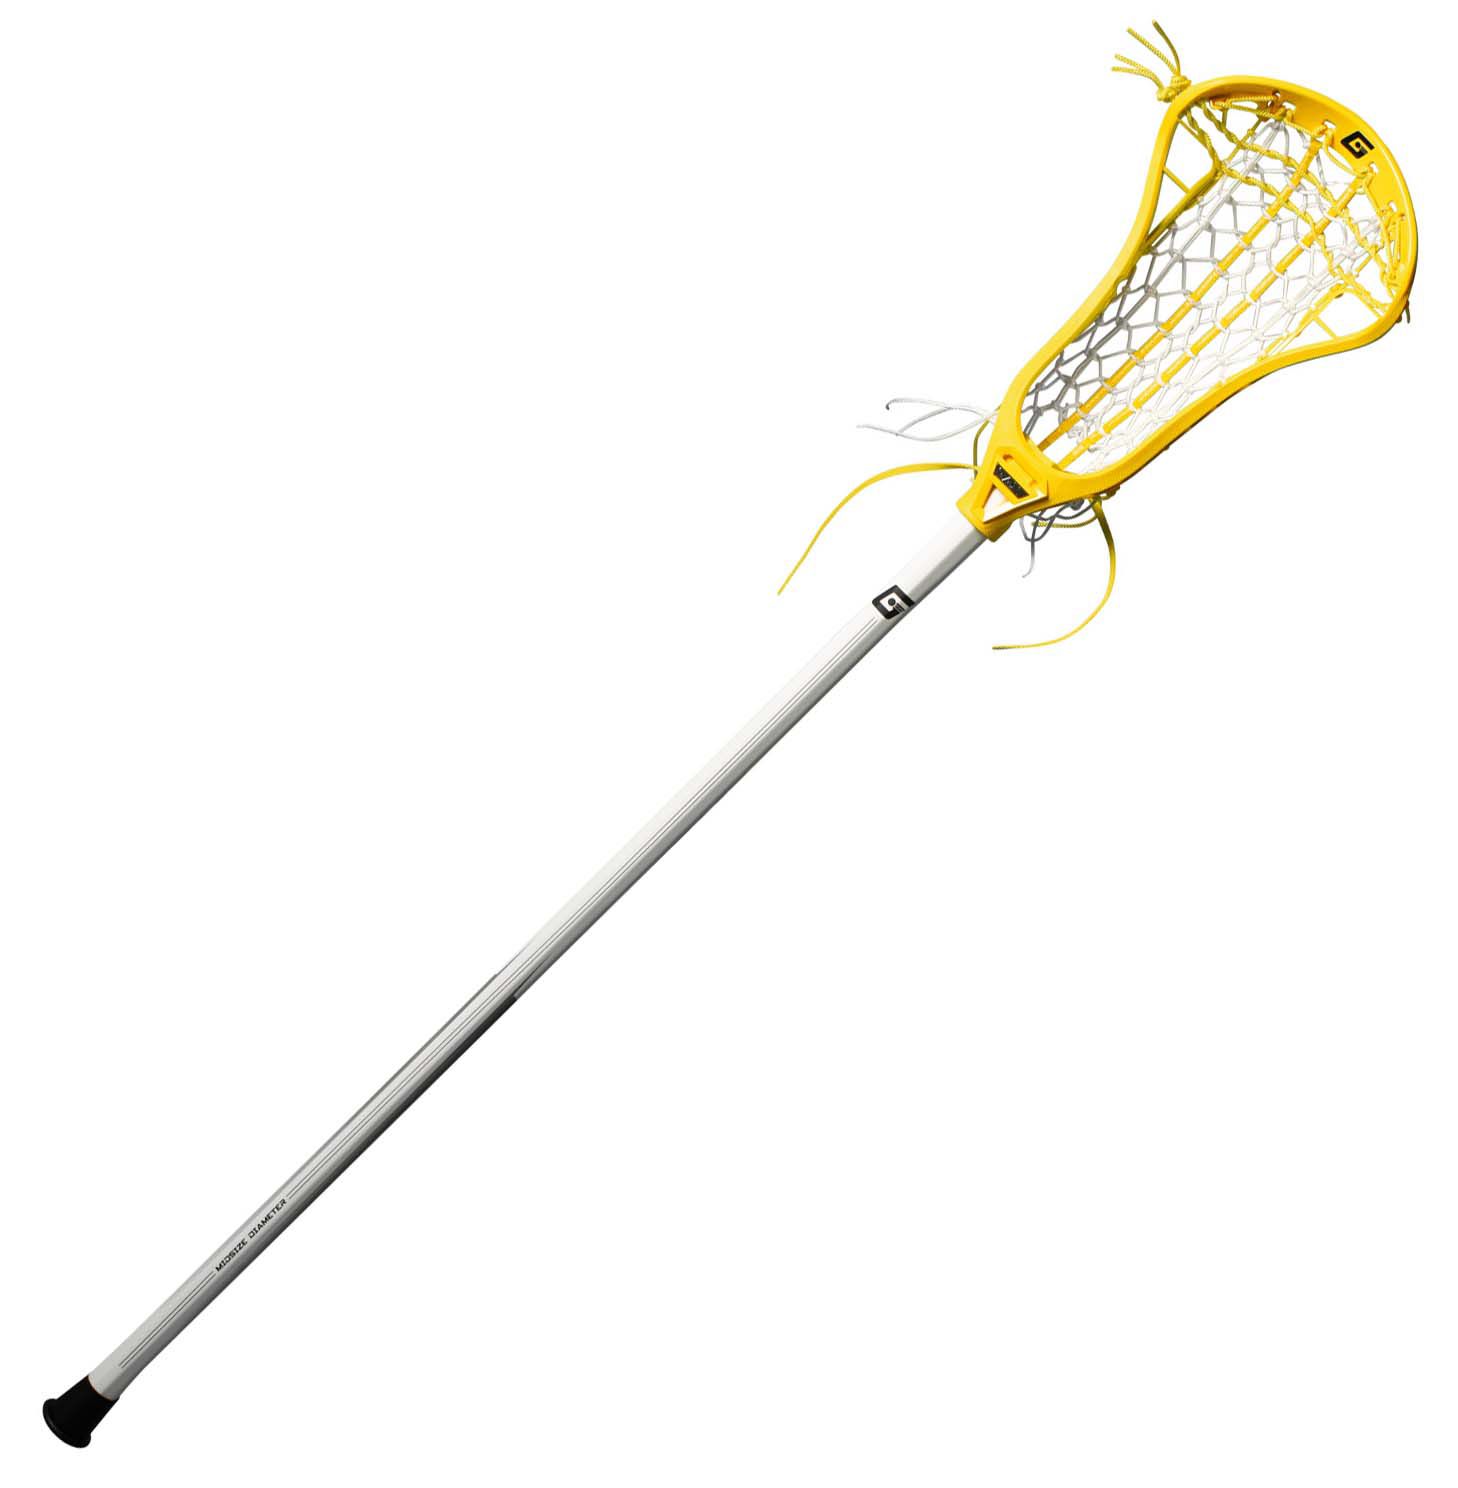 Gait Women's Draw 2 Complete Lacrosse Stick